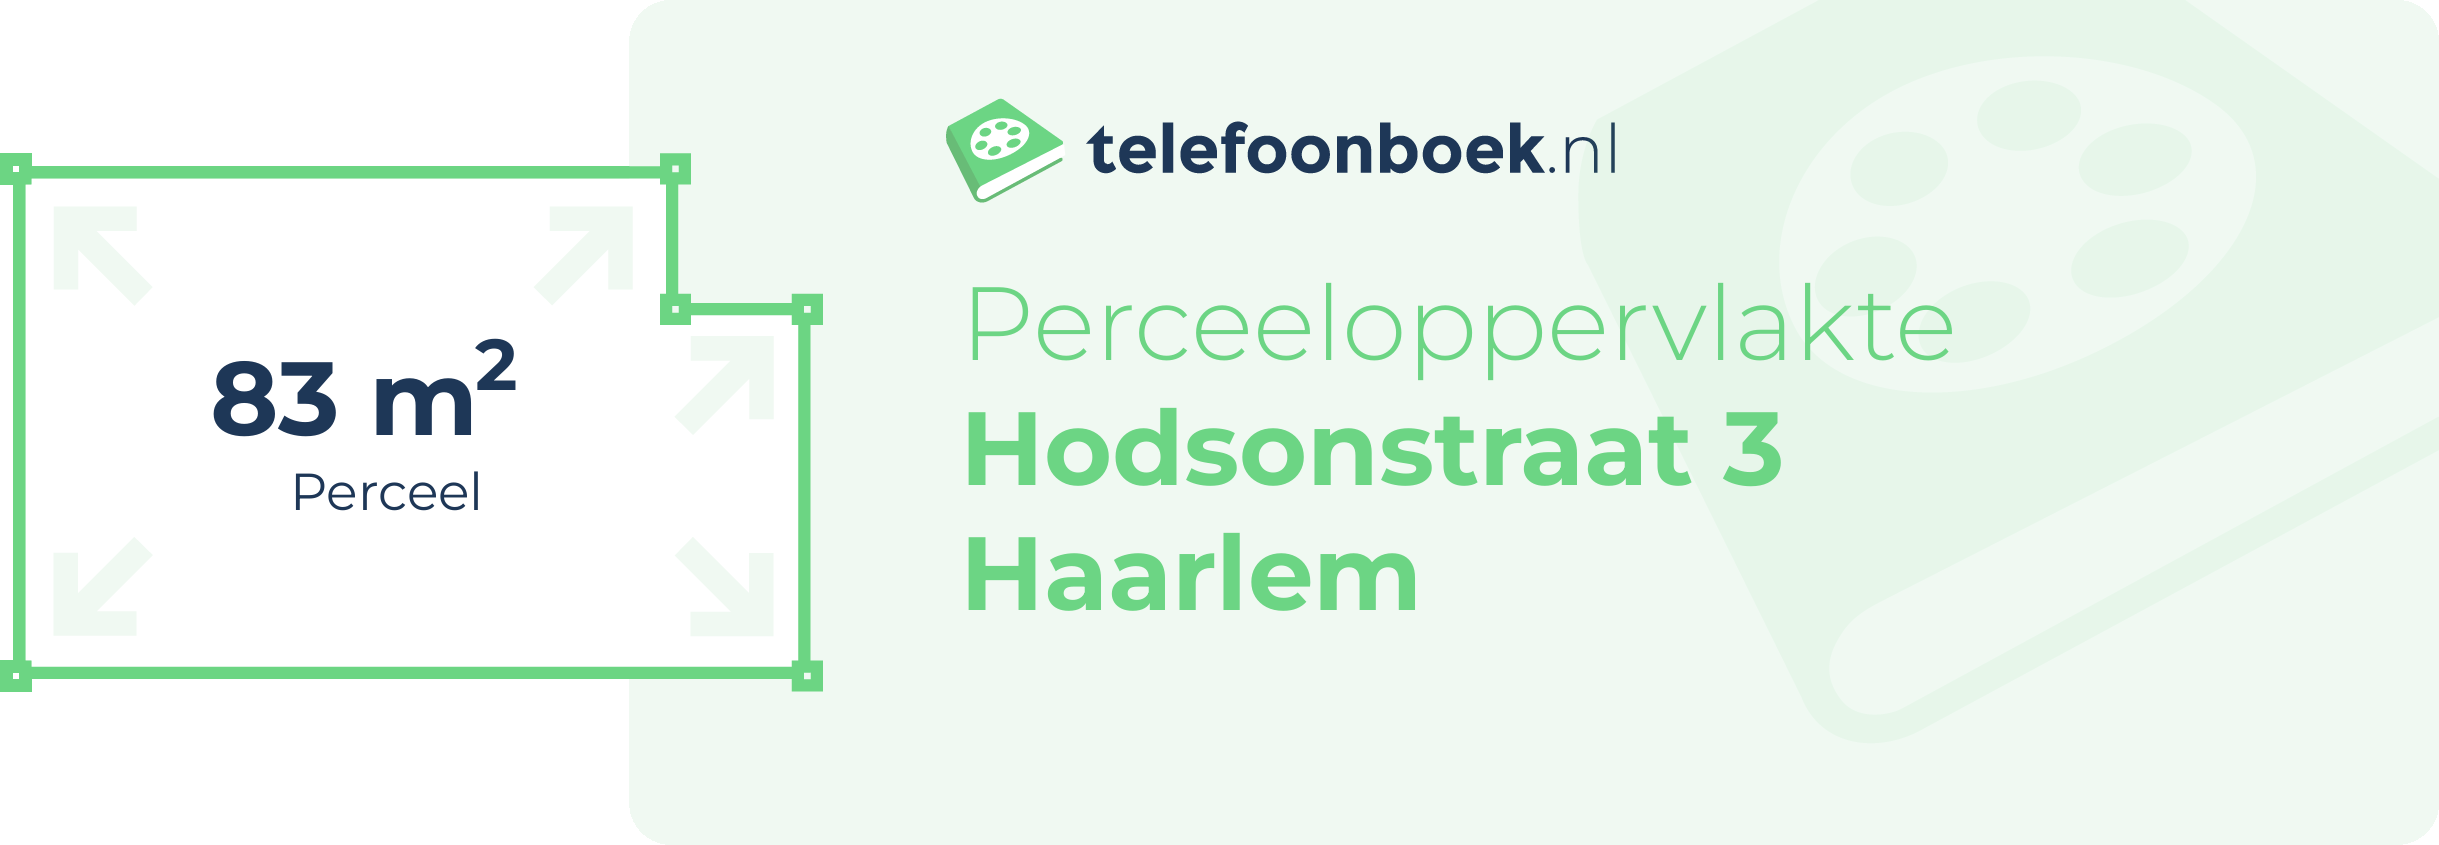 Perceeloppervlakte Hodsonstraat 3 Haarlem